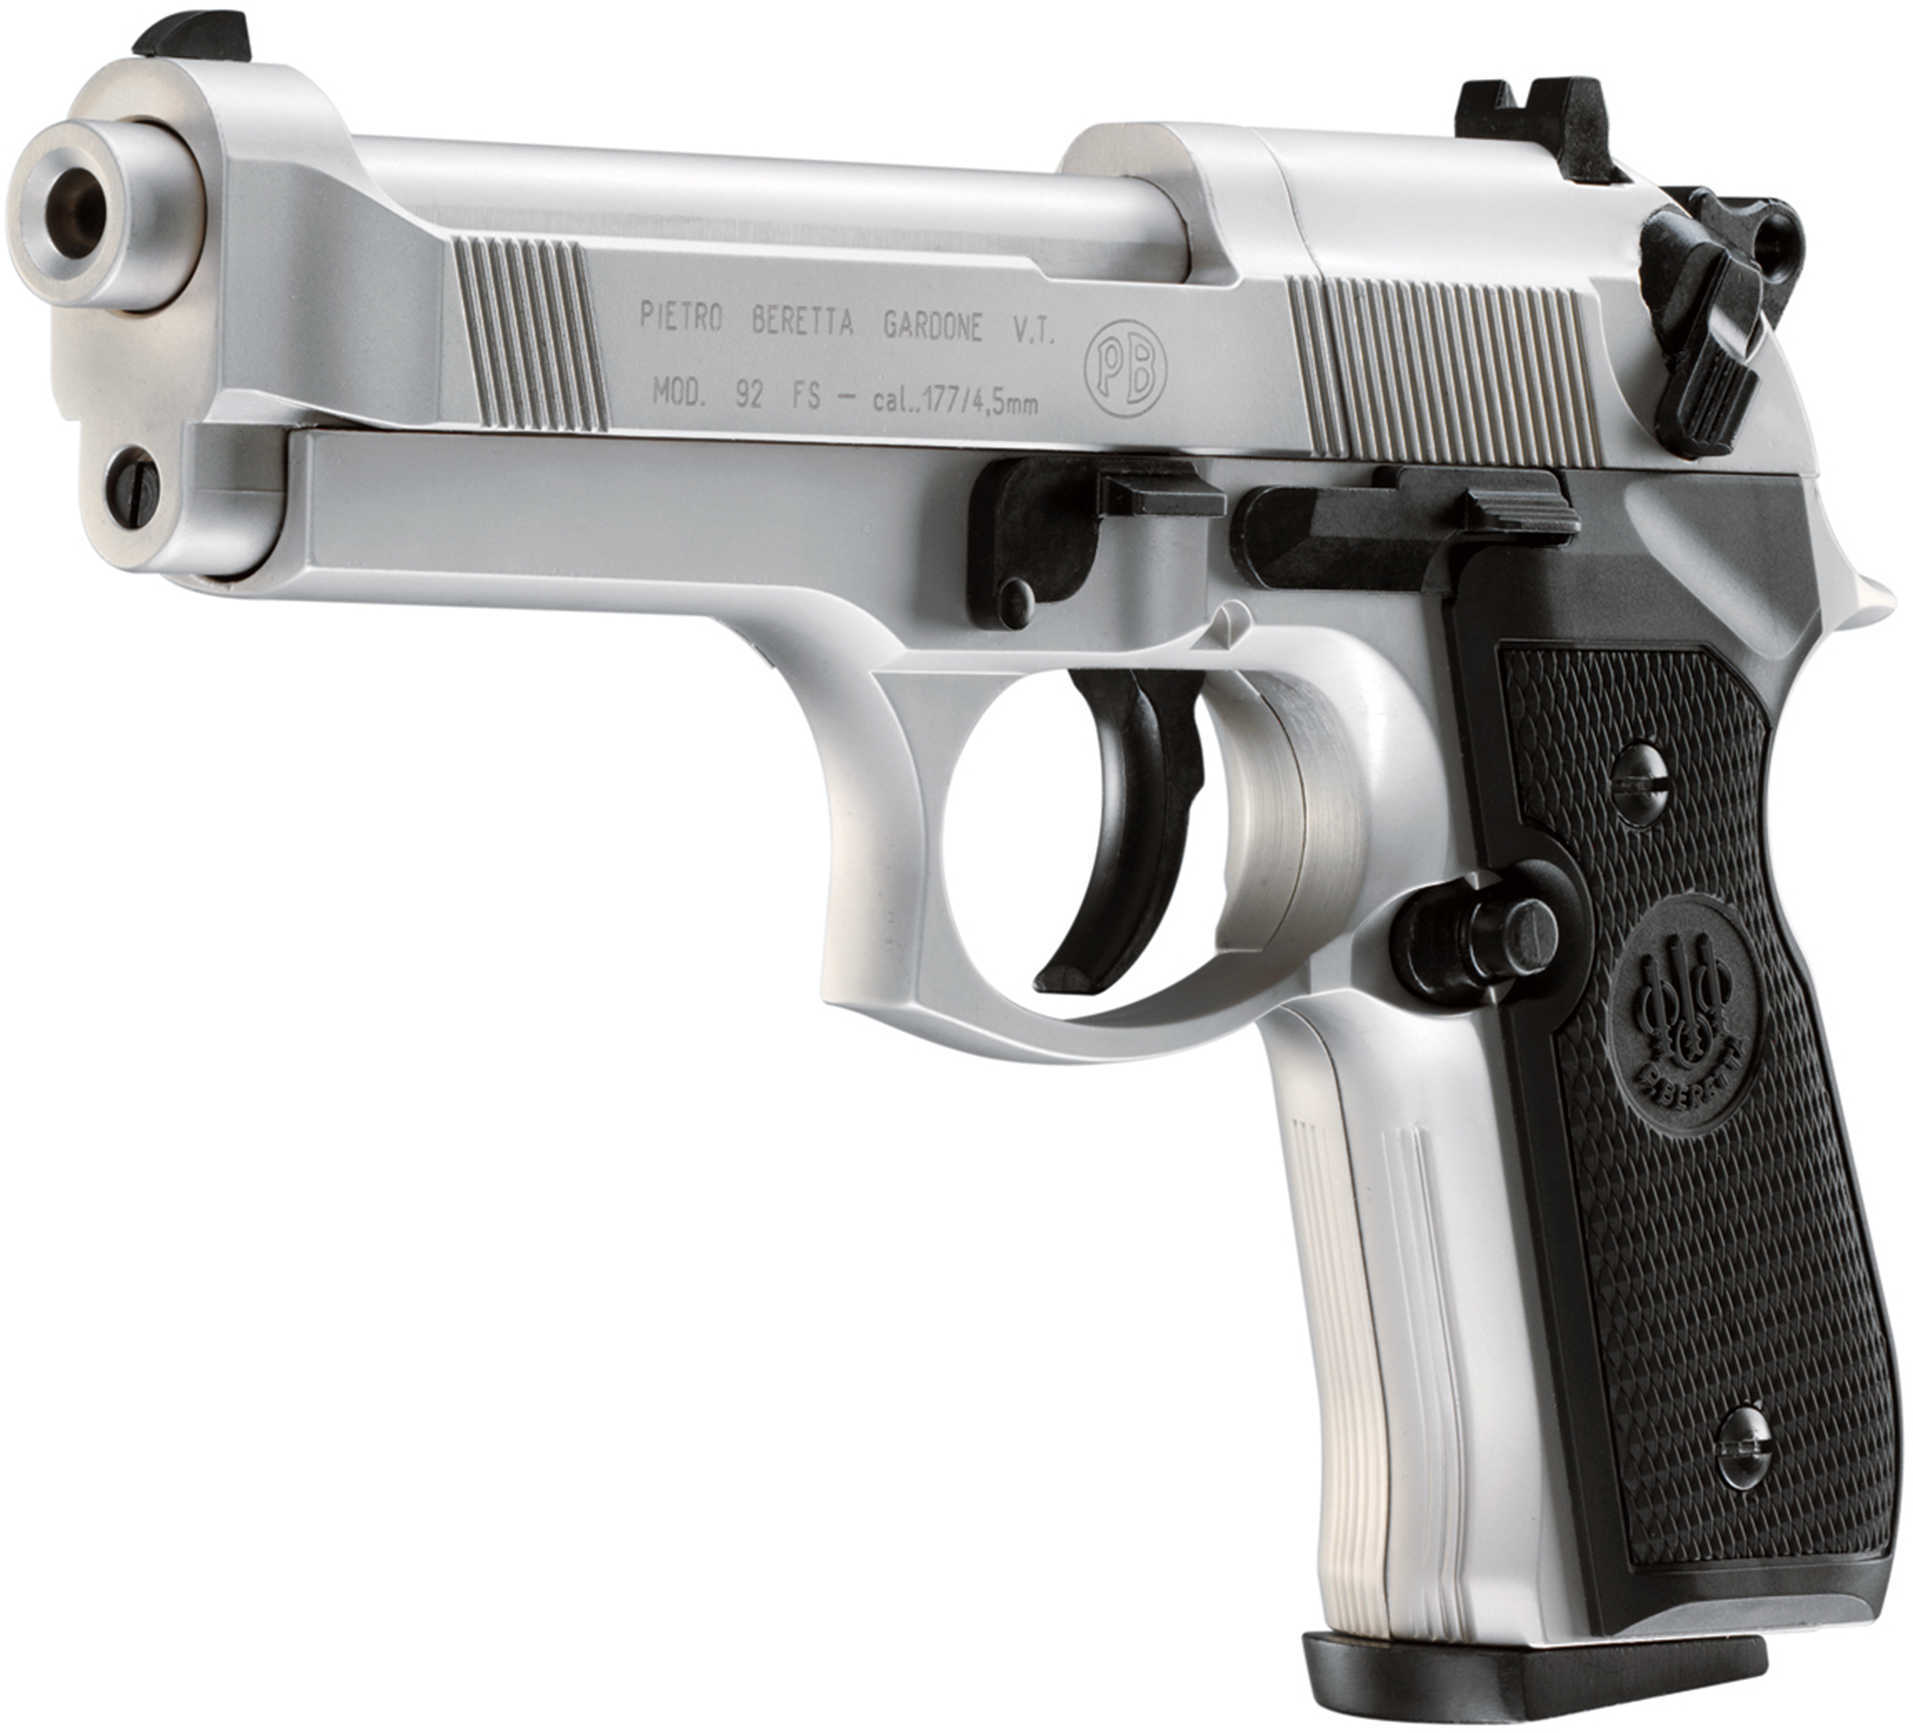 Umarex Beretta 92 Semi-Automatic .177 Caliber Co2 Pistol With Nickel Finish Md: 2253001